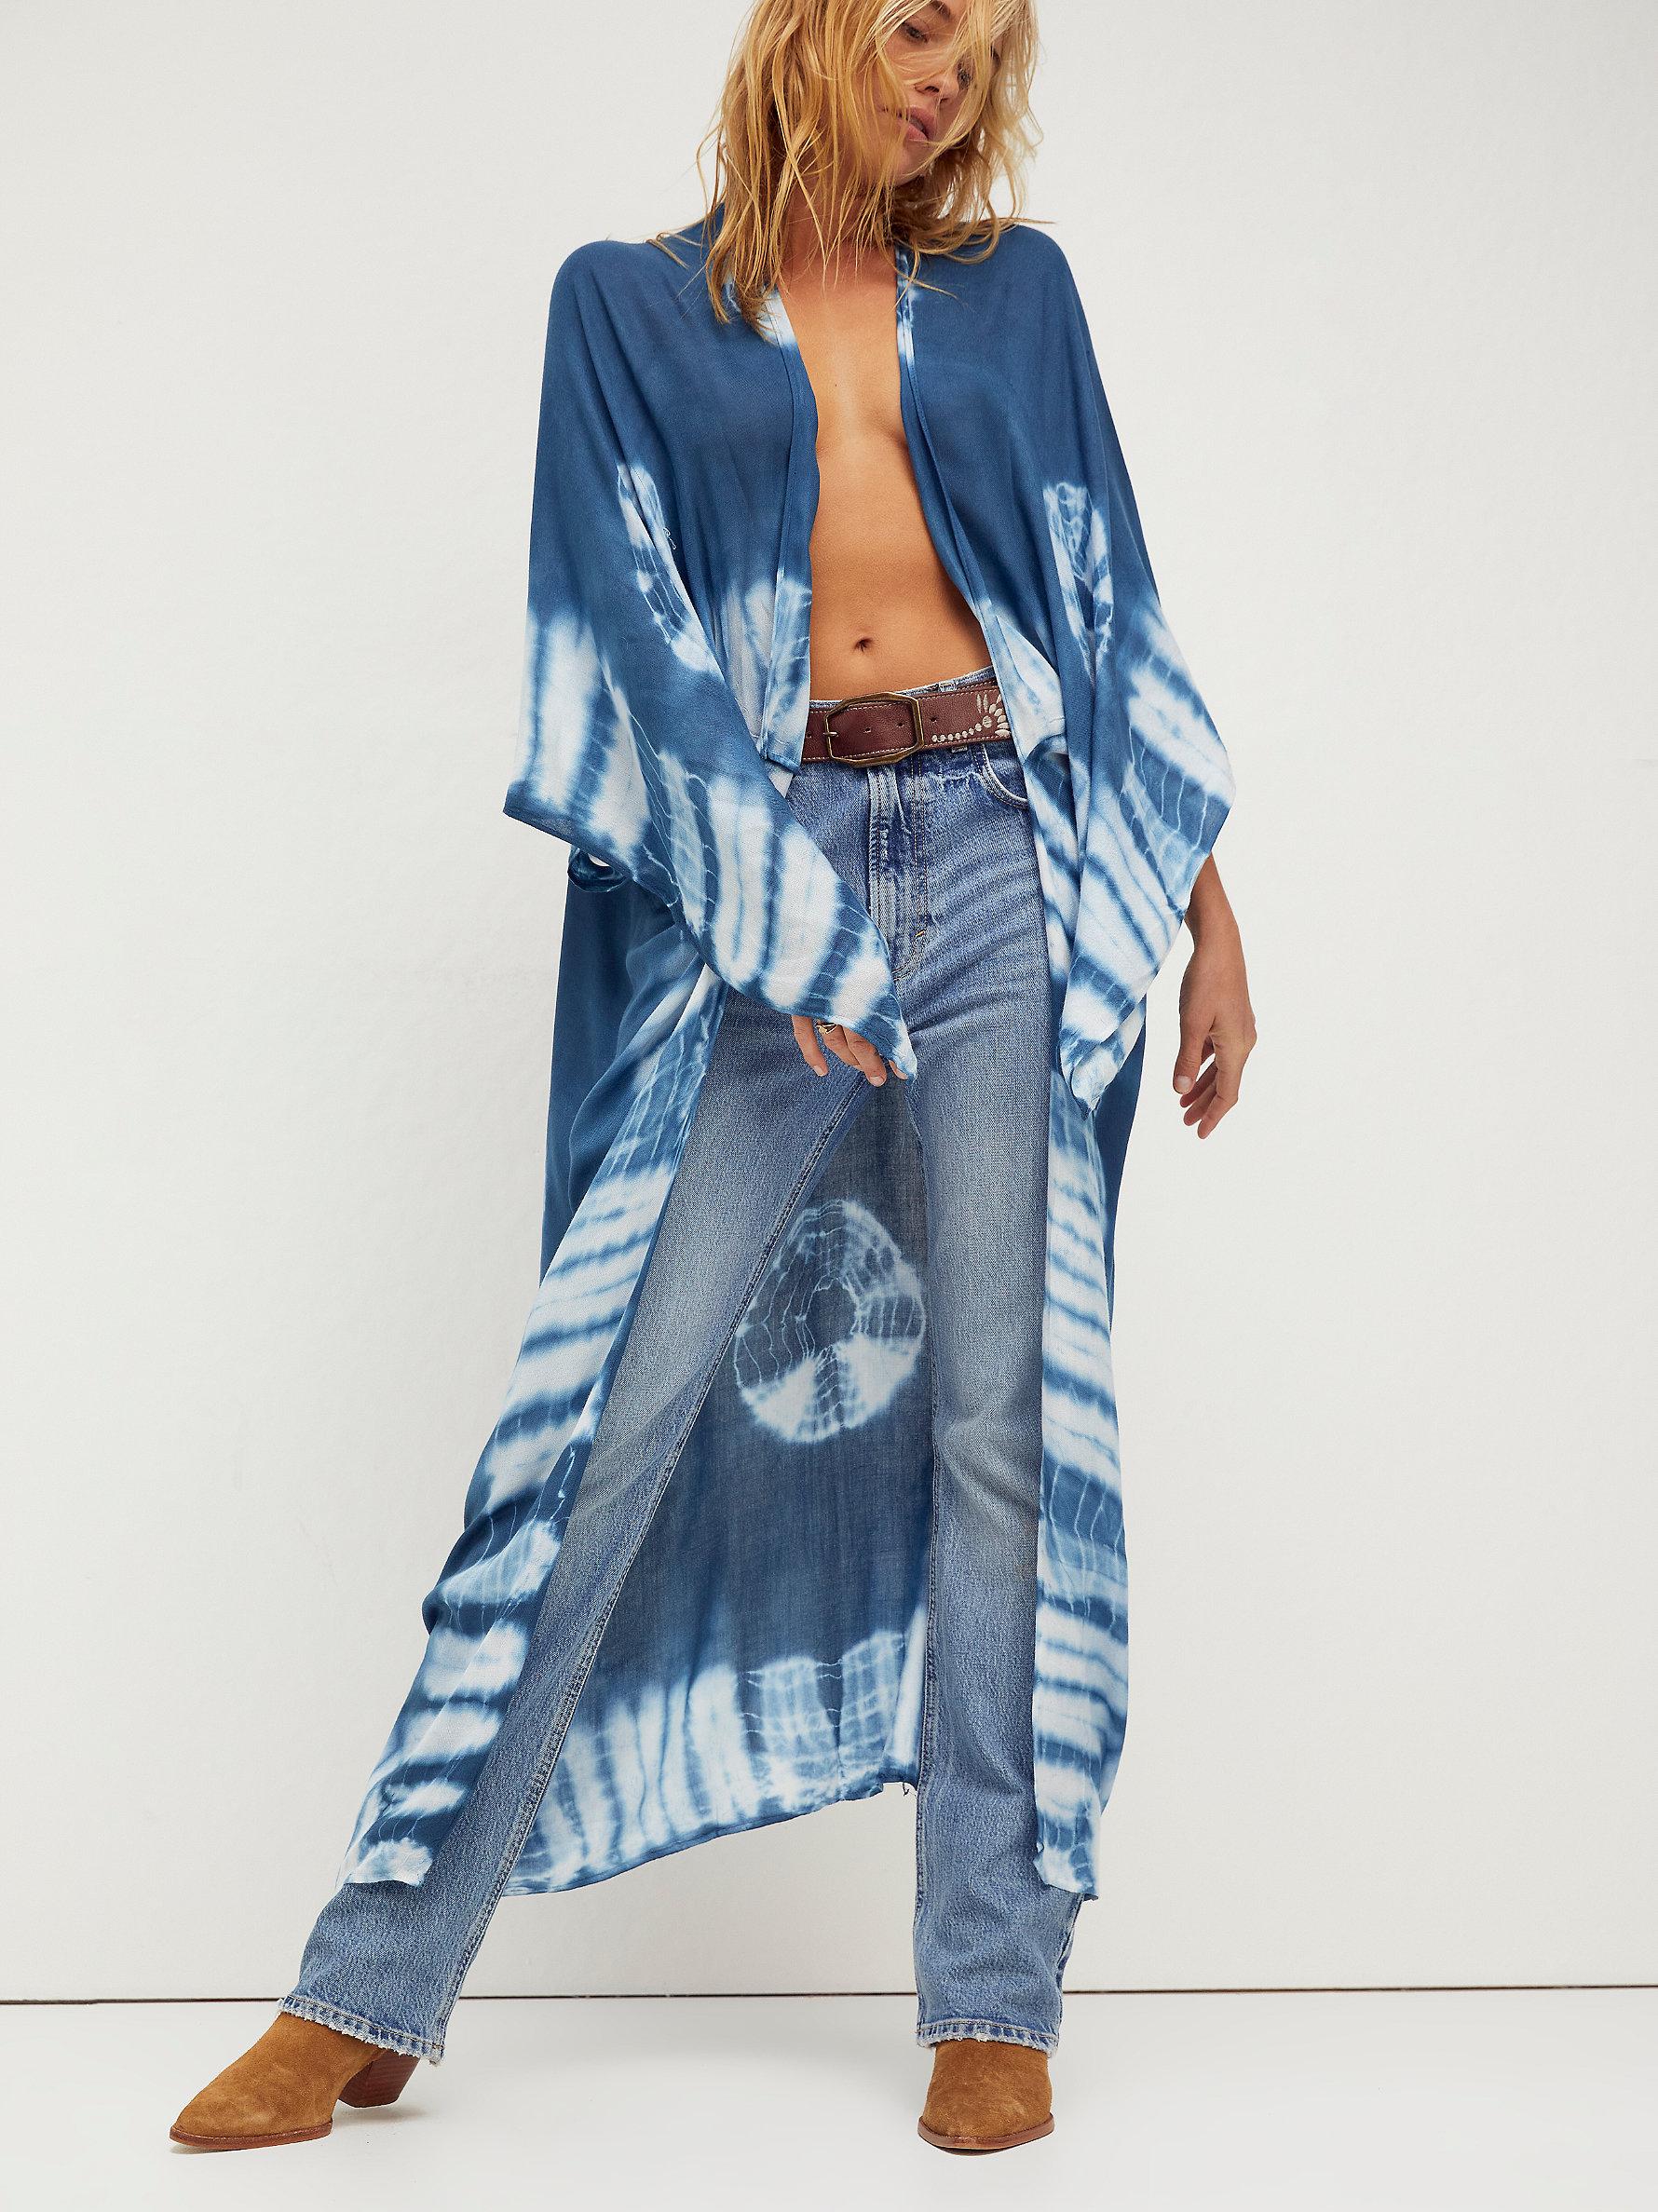 FP1 Sasha Tie-Dye Kimono Details about   Free People NEW Medium/Large Lavender Combo 